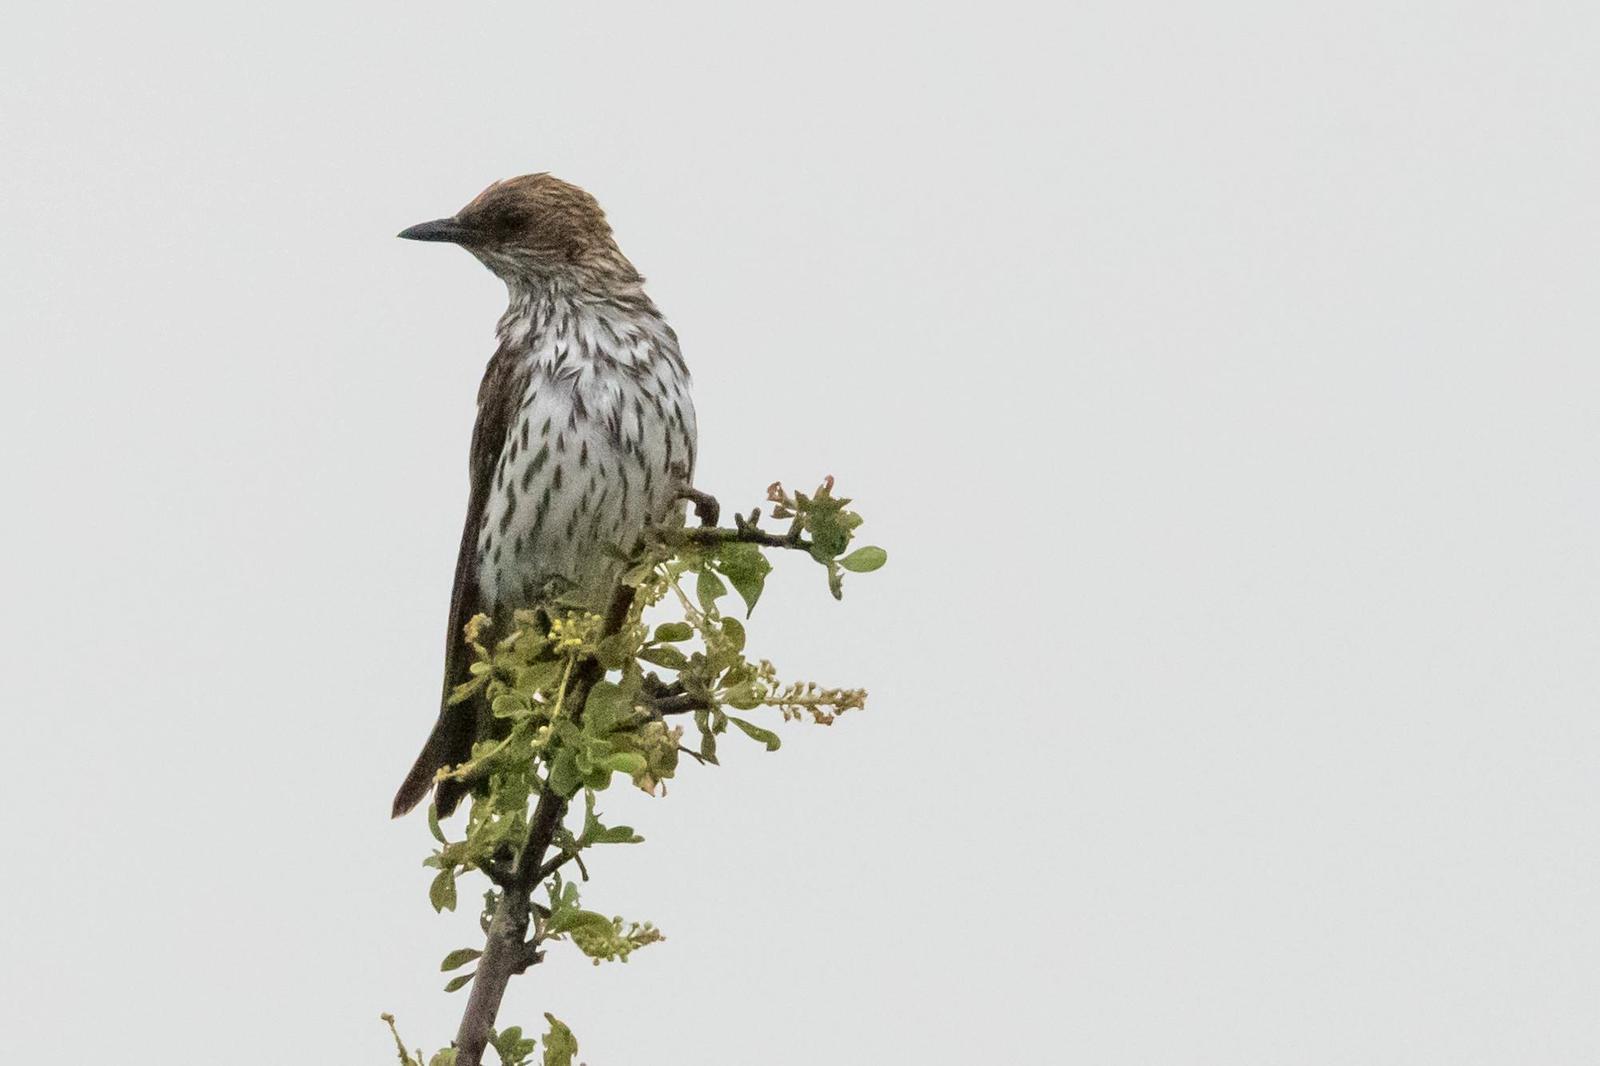 Violet-backed Starling Photo by Gerald Hoekstra